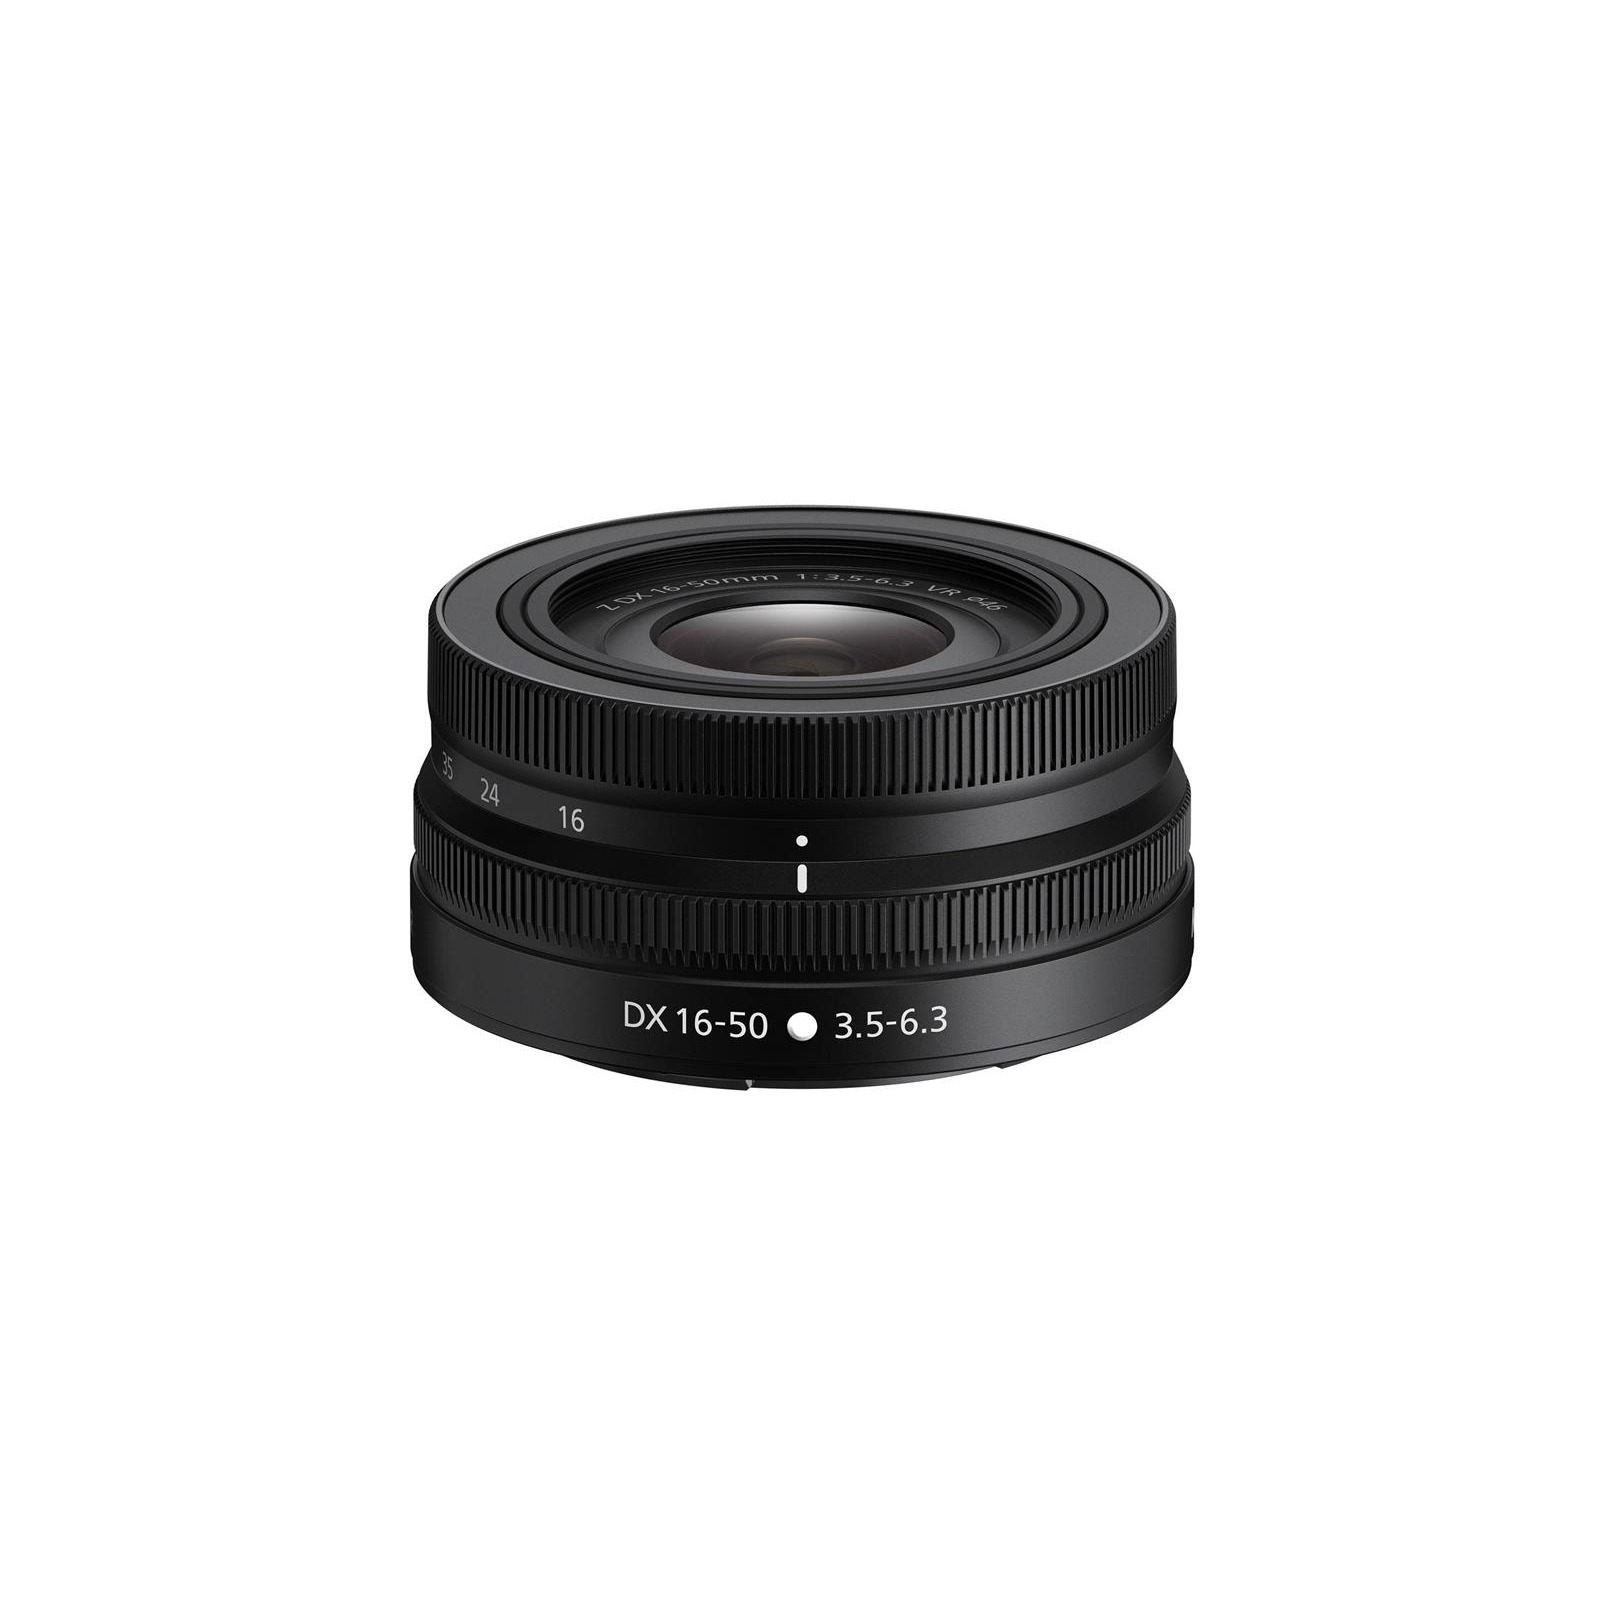 Объектив Nikon Z DX 16-50mm f/3.5-6.3 VR (JMA706DA)